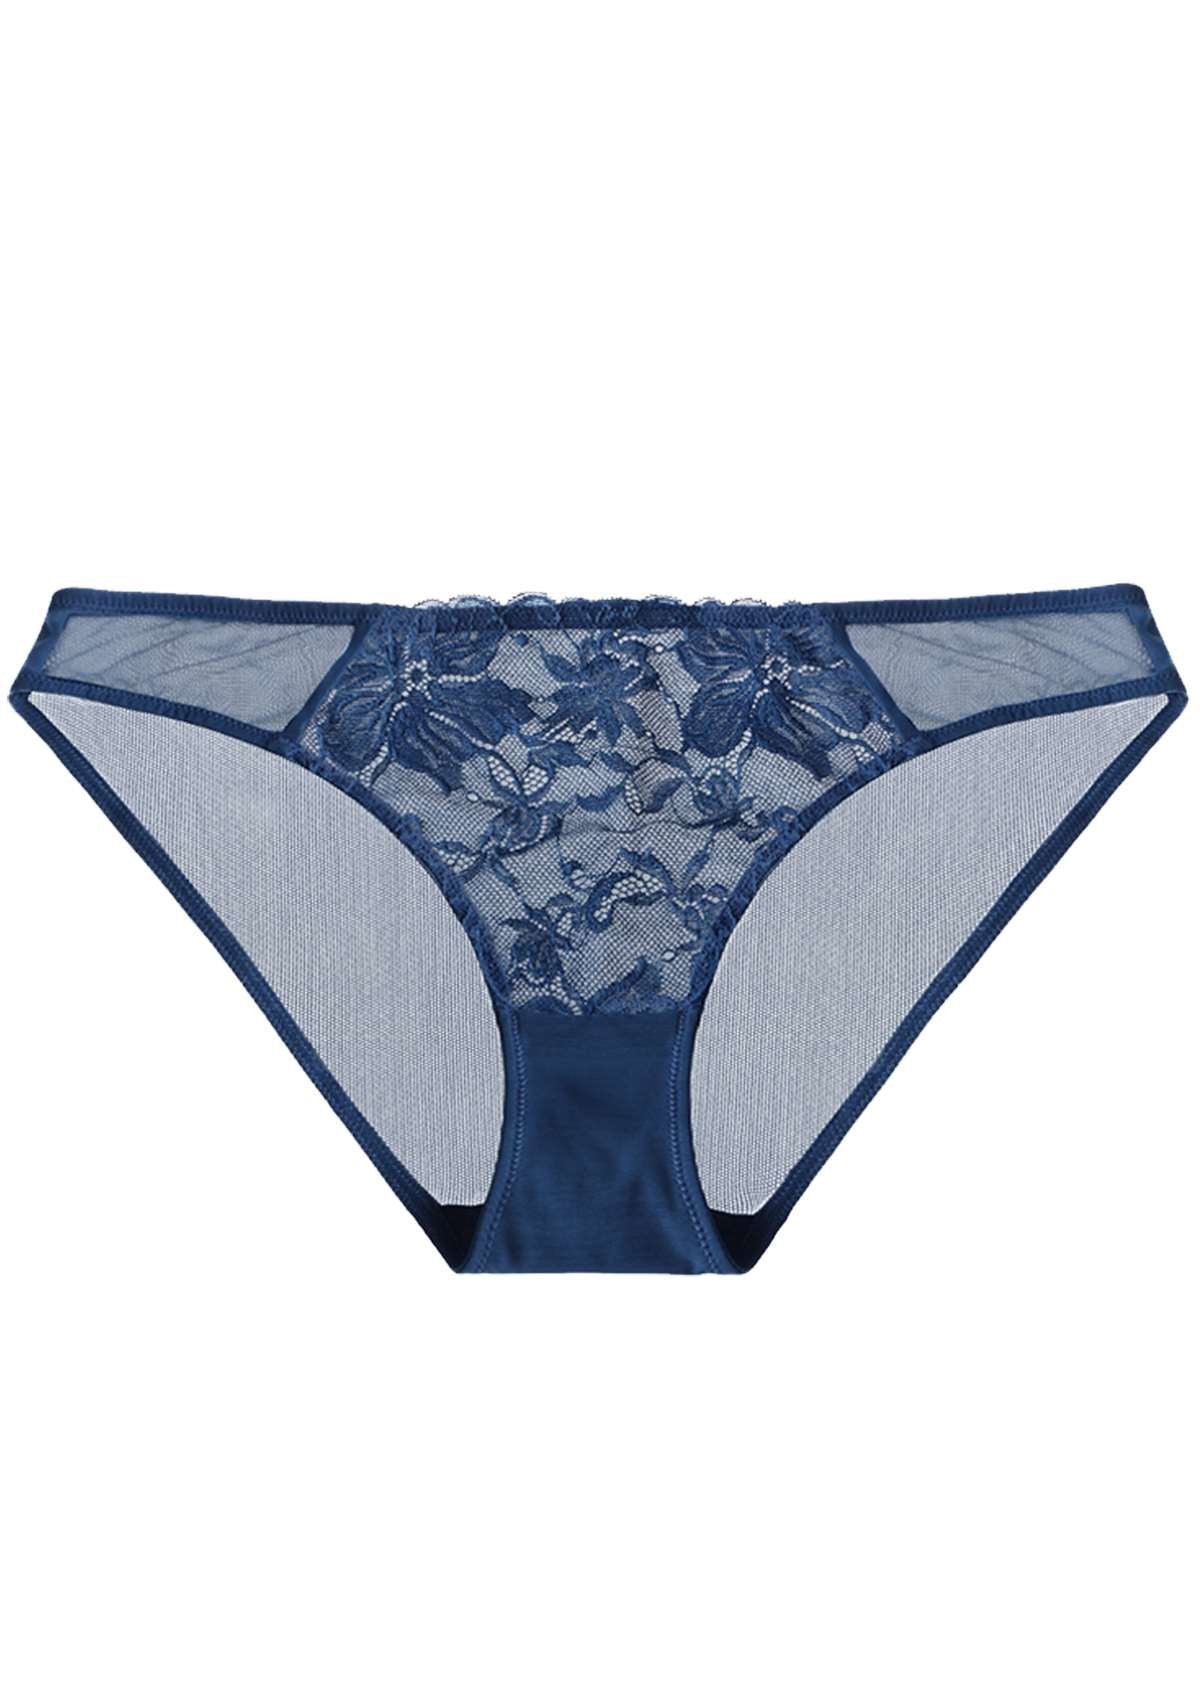 HSIA Breathable Sexy Feminine Lace Mesh Bikini Underwear - M / Blue